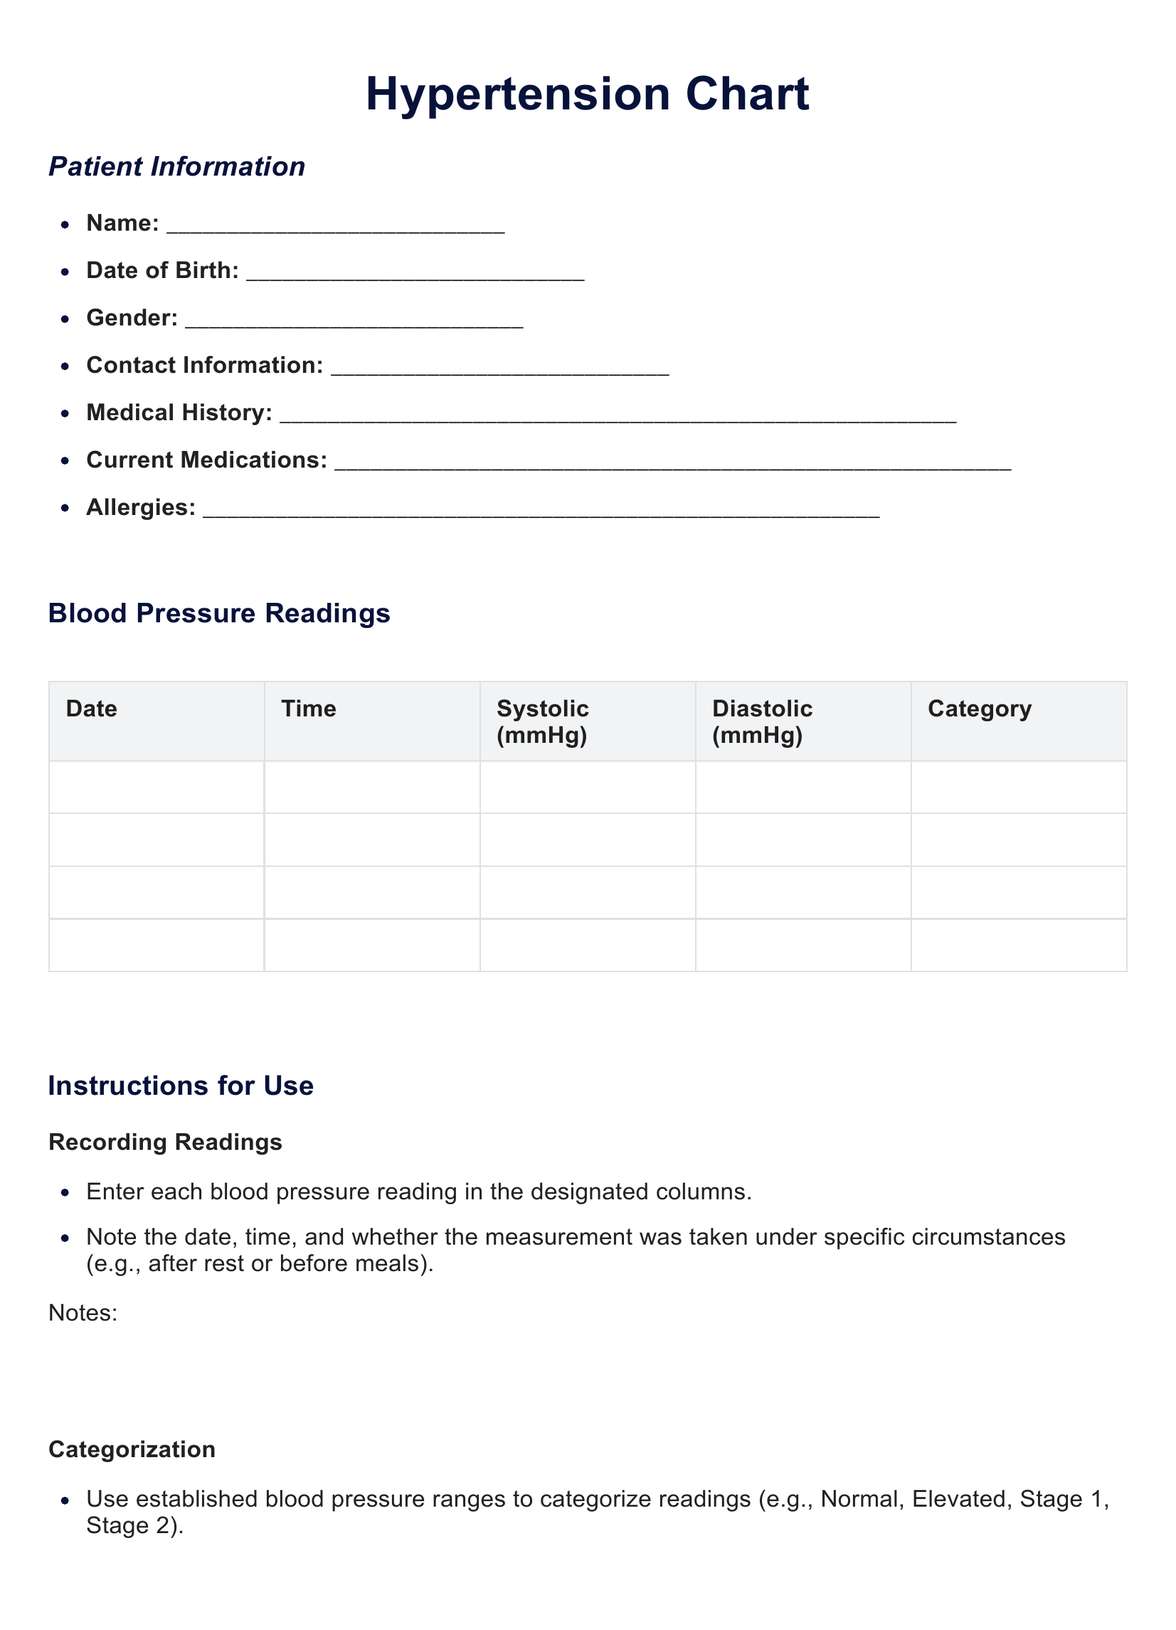 Hypertension PDF Example